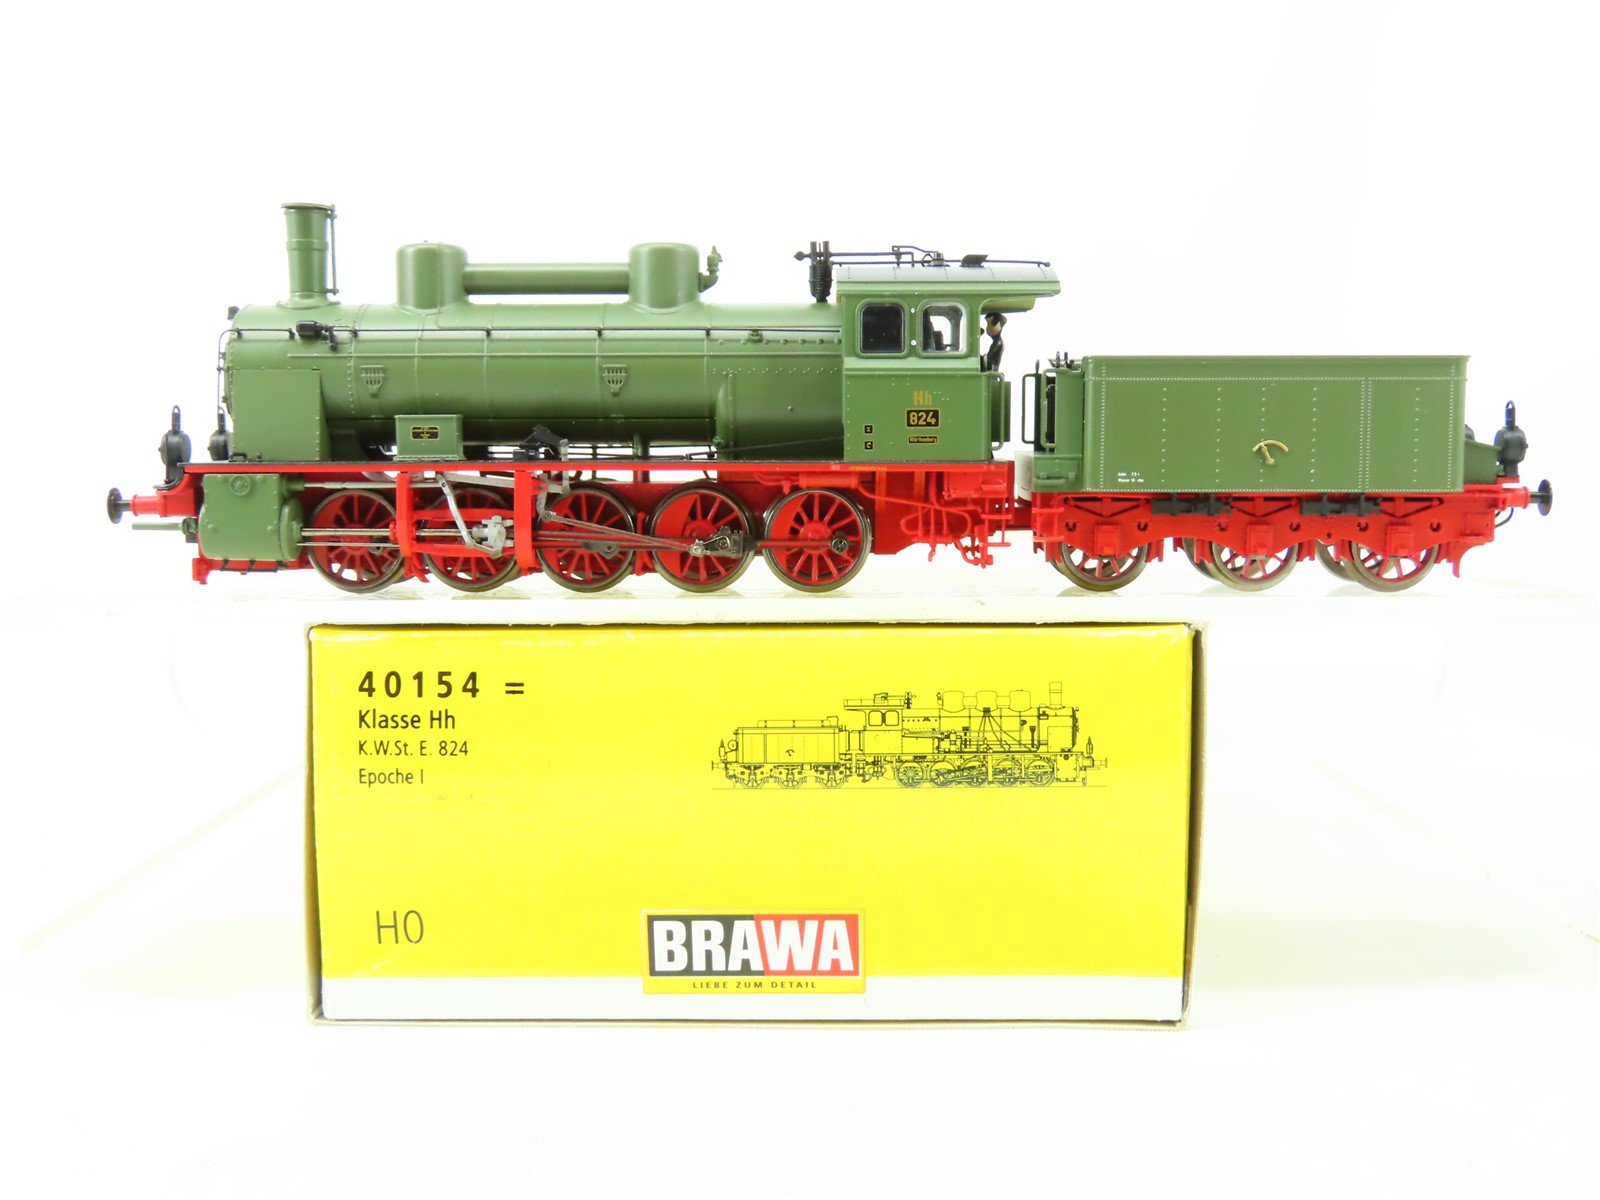 HO BRAWA 40154 K.W.St.E. Wurttemberg 0-10-0 Class Hh Steam #824 - DCC Ready